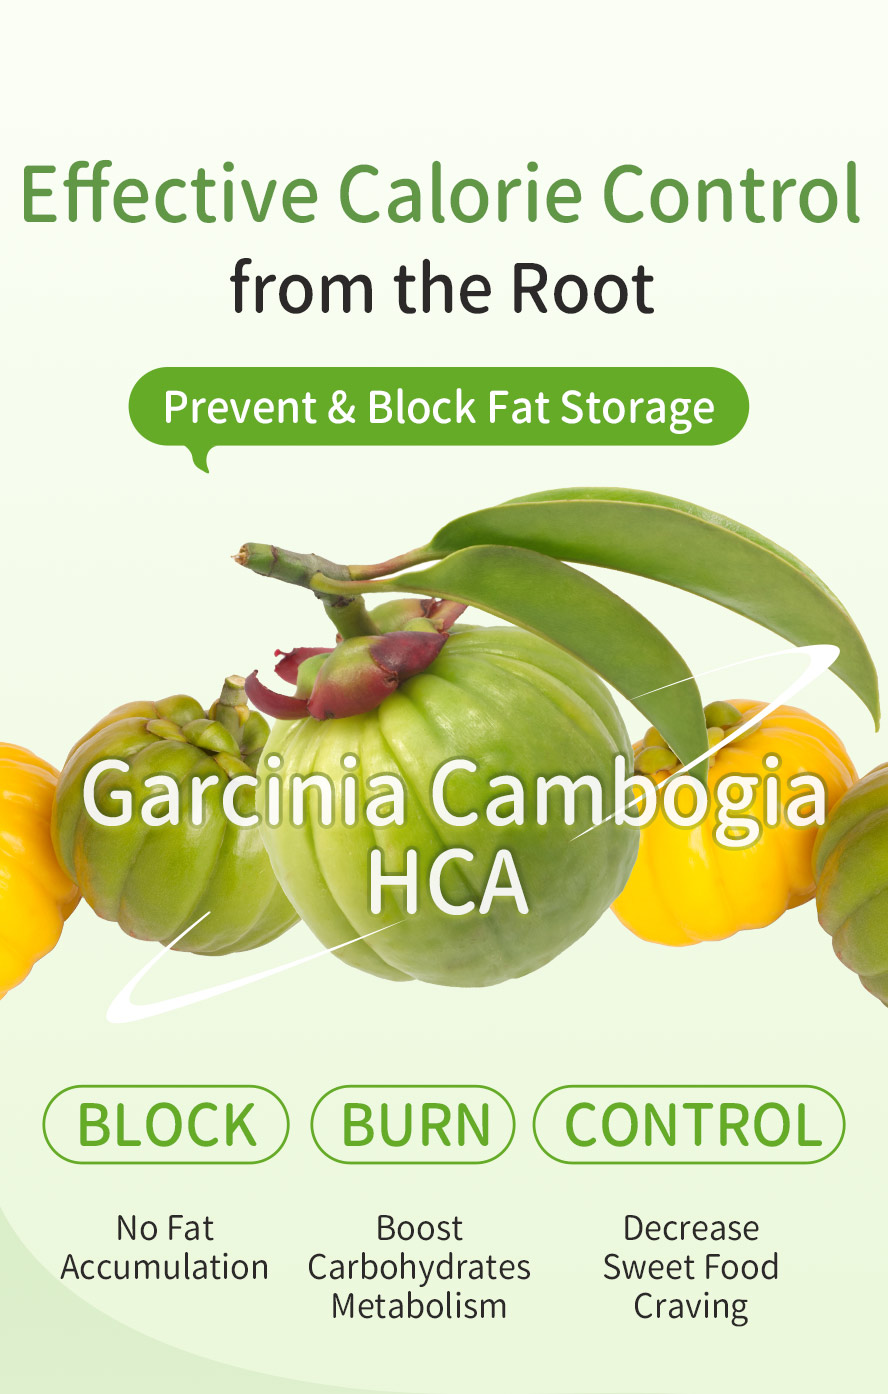 BHK's GarciniaCambogia reduces appetite, metabolism boosting, lesser desire with Hydroxycitric Acid